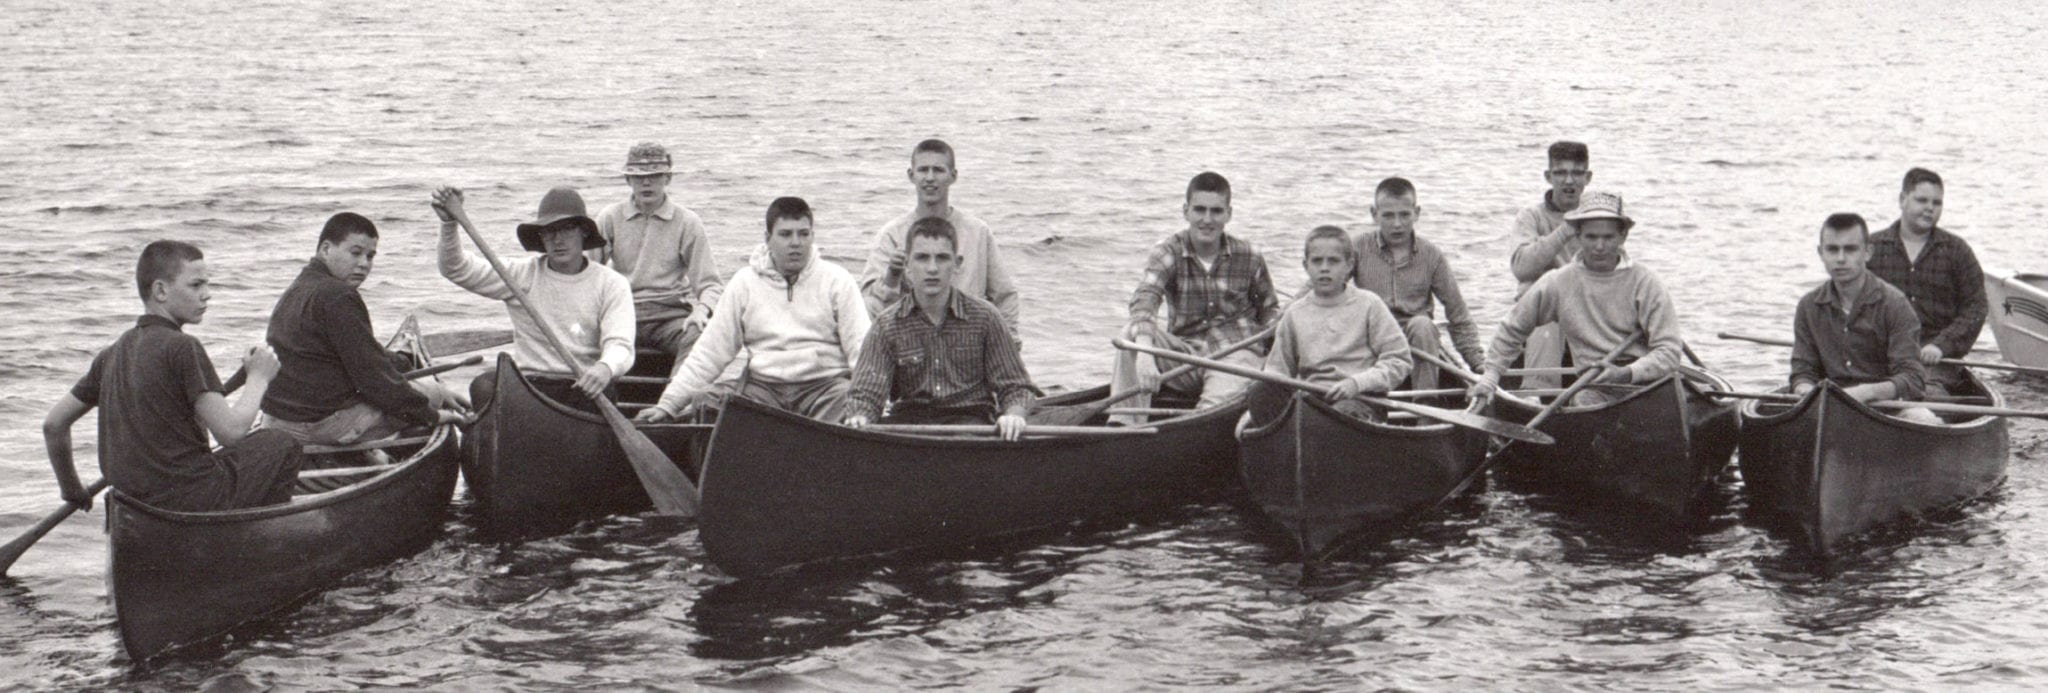 kids in canoes